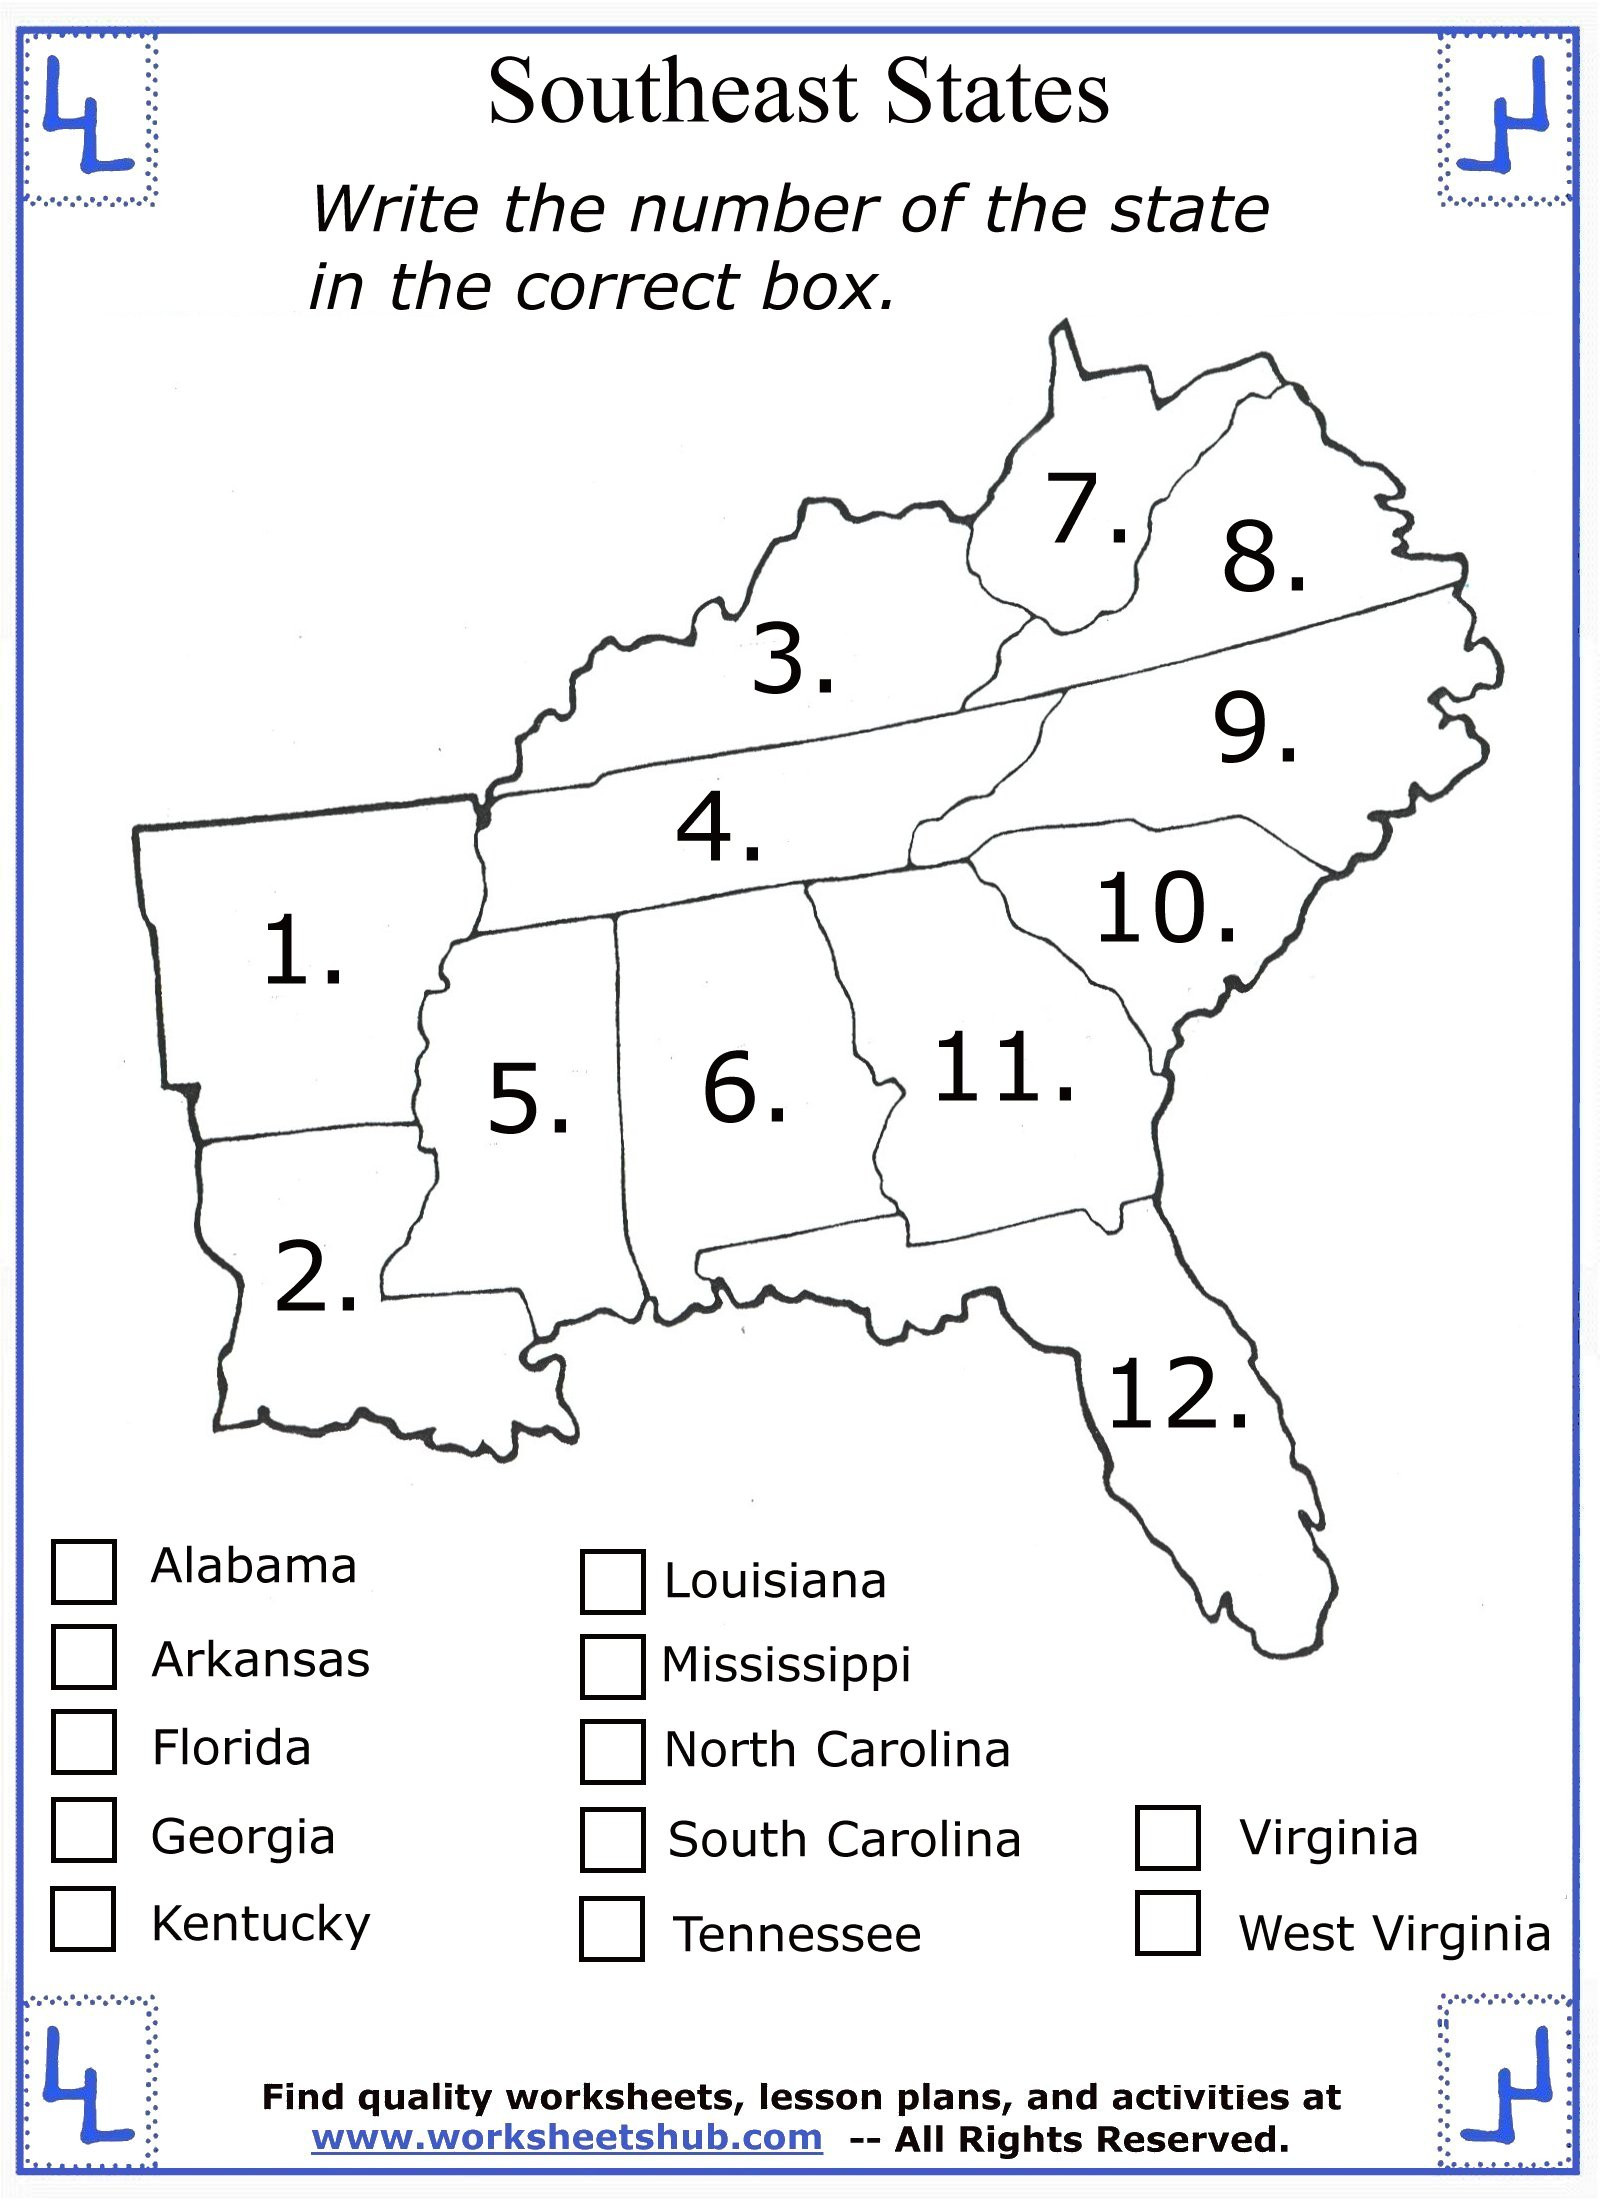 4th Grade History Worksheets 4th Grade social Stu S southeast Region States